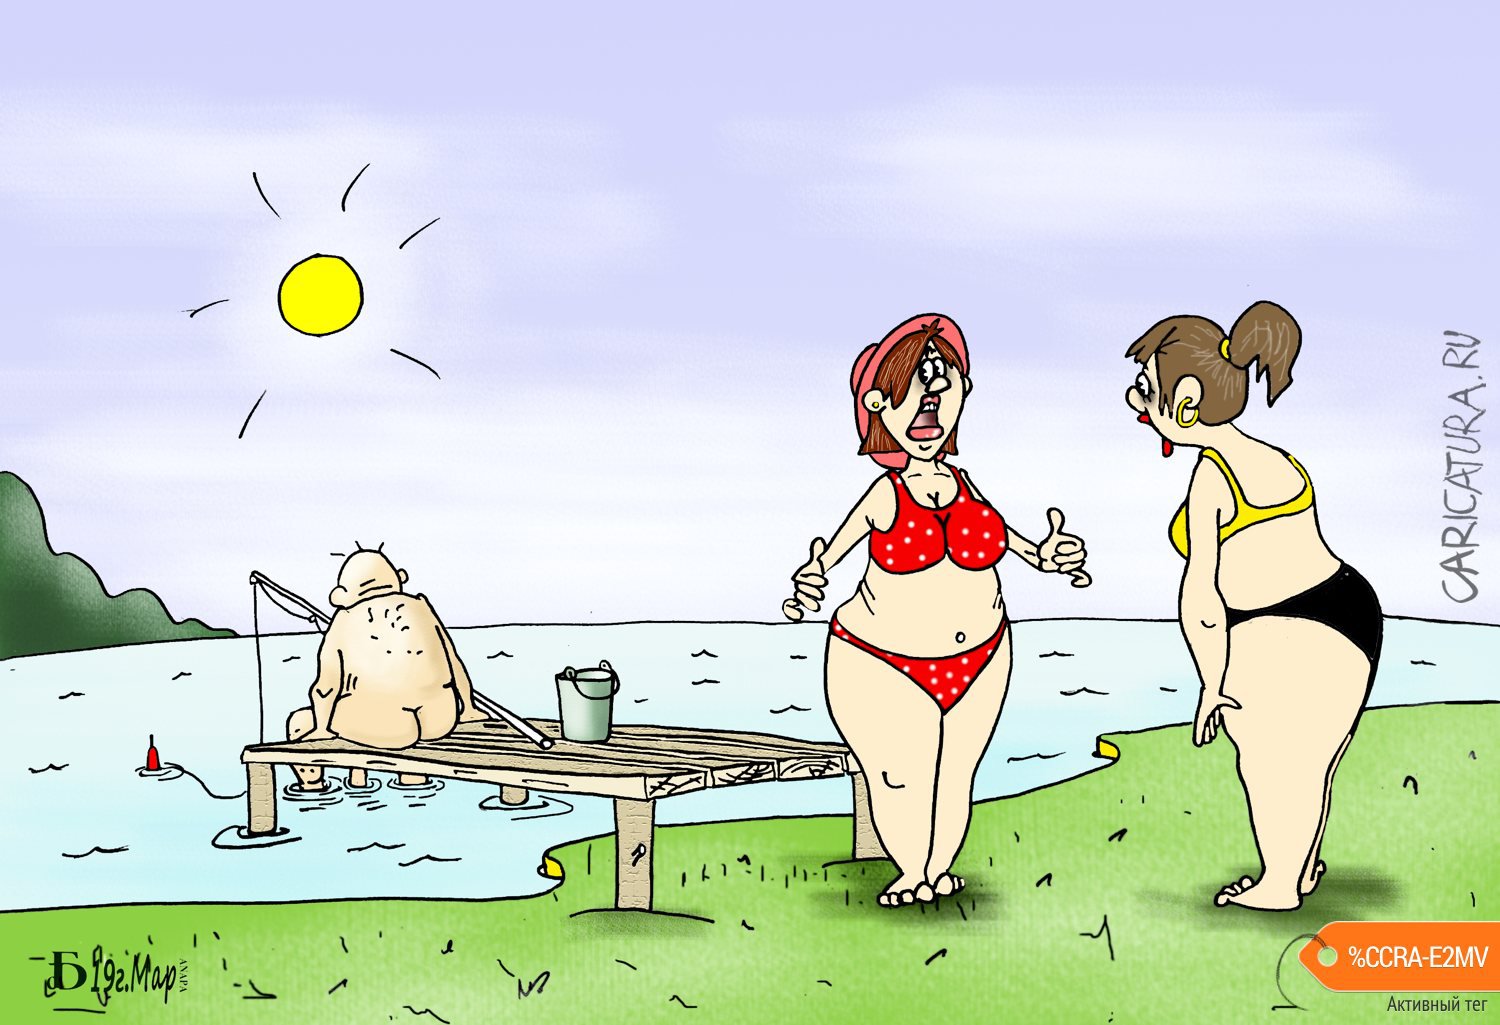 Карикатура "Про рыбалку", Борис Демин